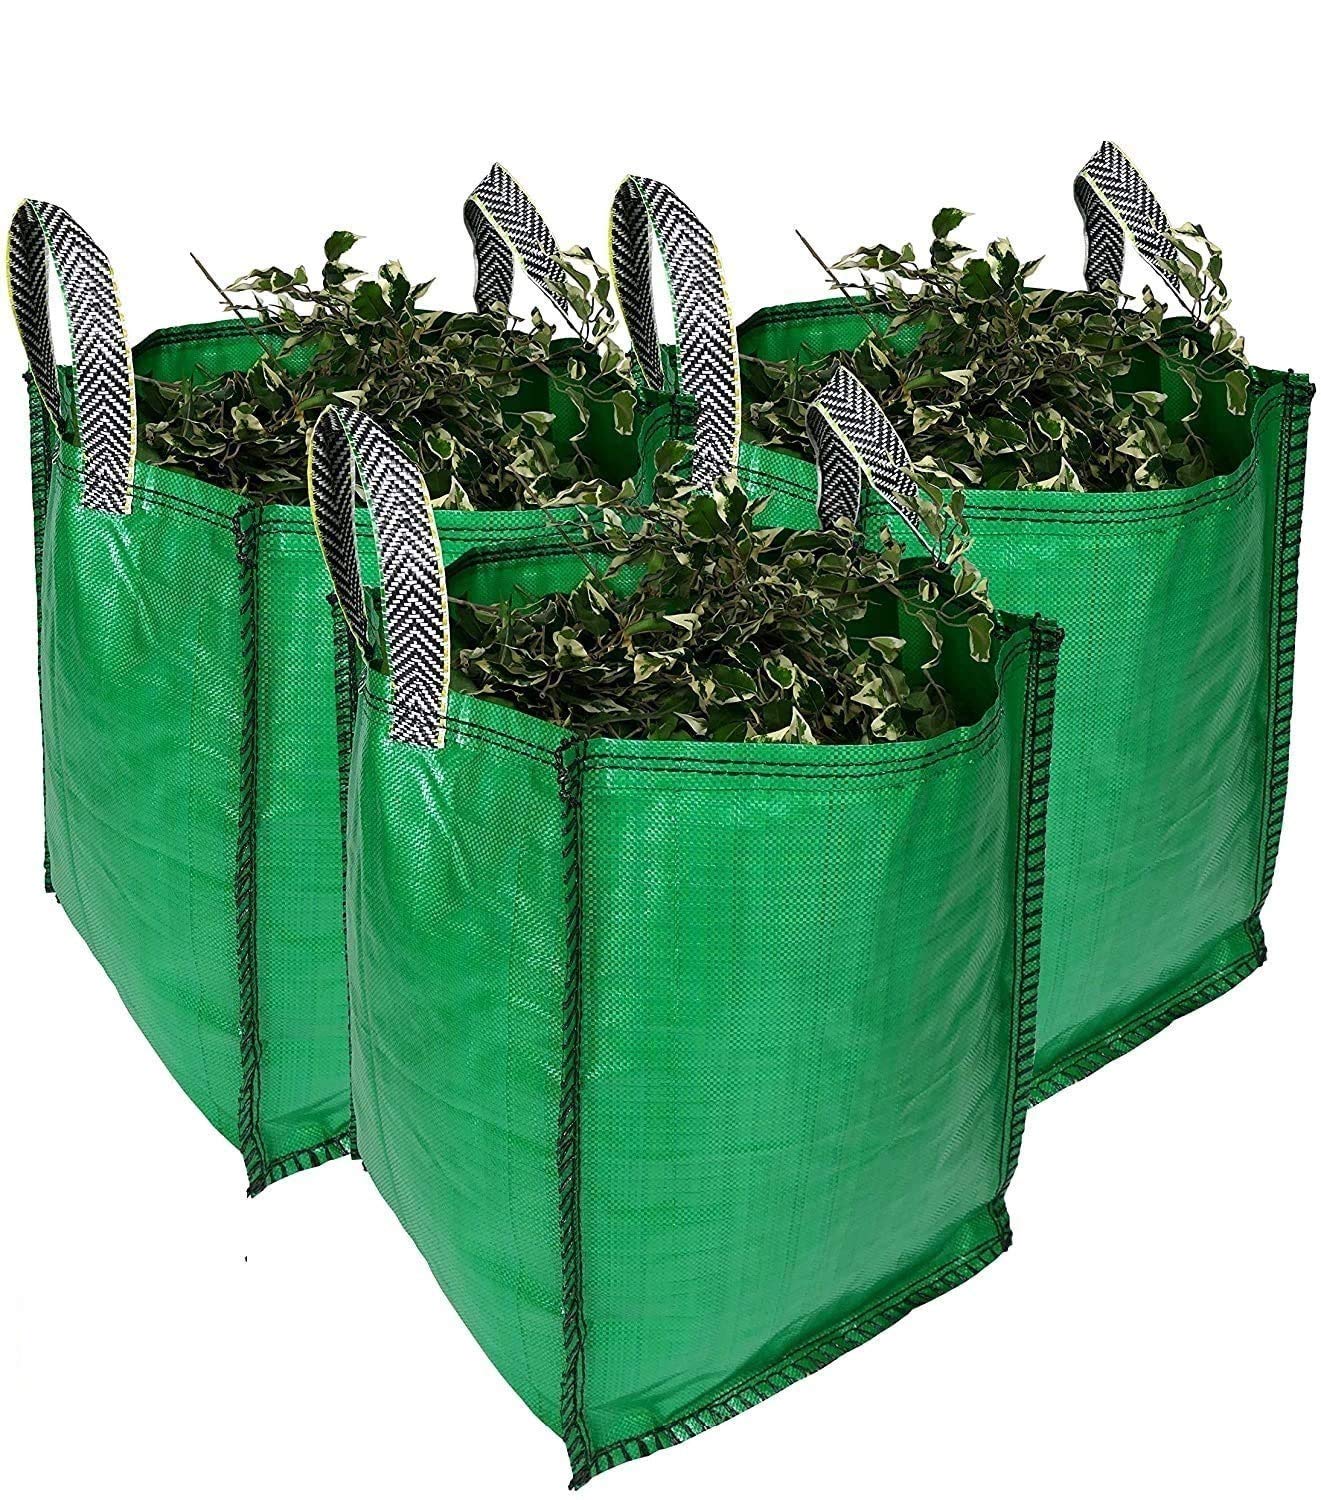 Heavy Duty Garden Waste Bag (120 Litre Sack) Recycling